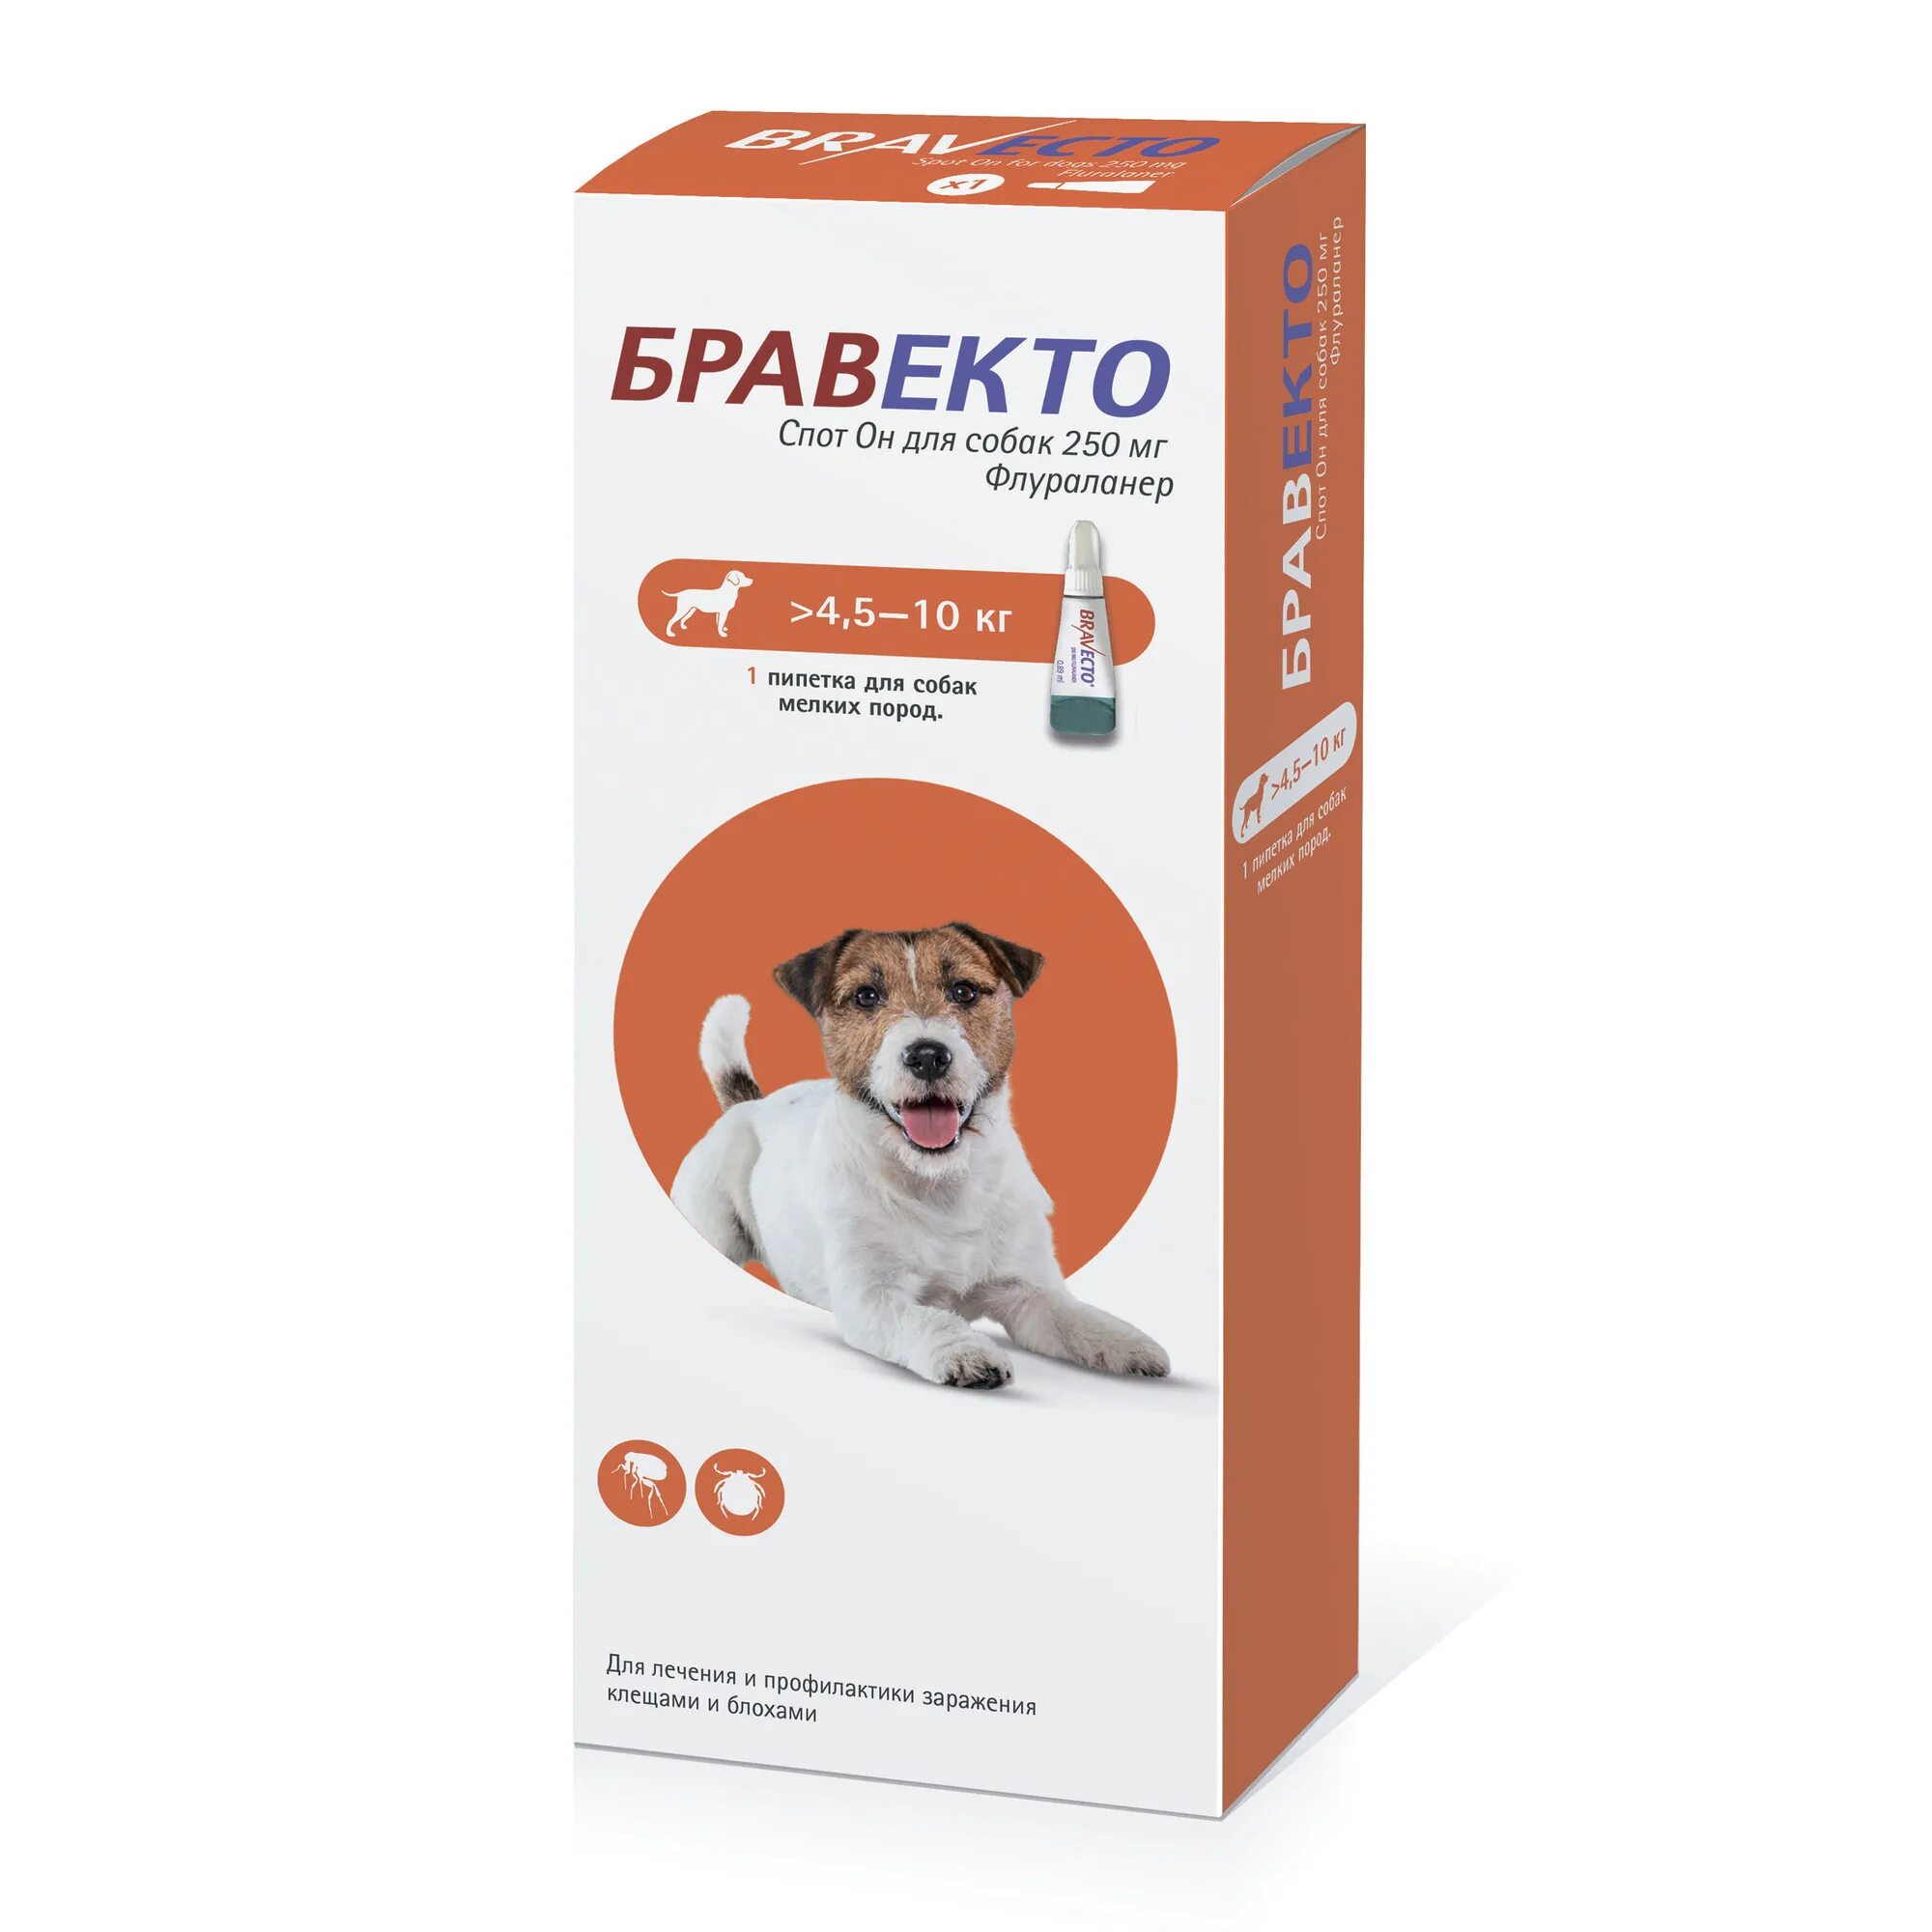 Бравекто спот он для собак (1400 мг) 40-56 кг. Бравекто spot-on 250 мг для собак 4.5-10 кг. Бравекто капли для собак 4.5-10. Бравекто для собак таблетки 4.5-10.